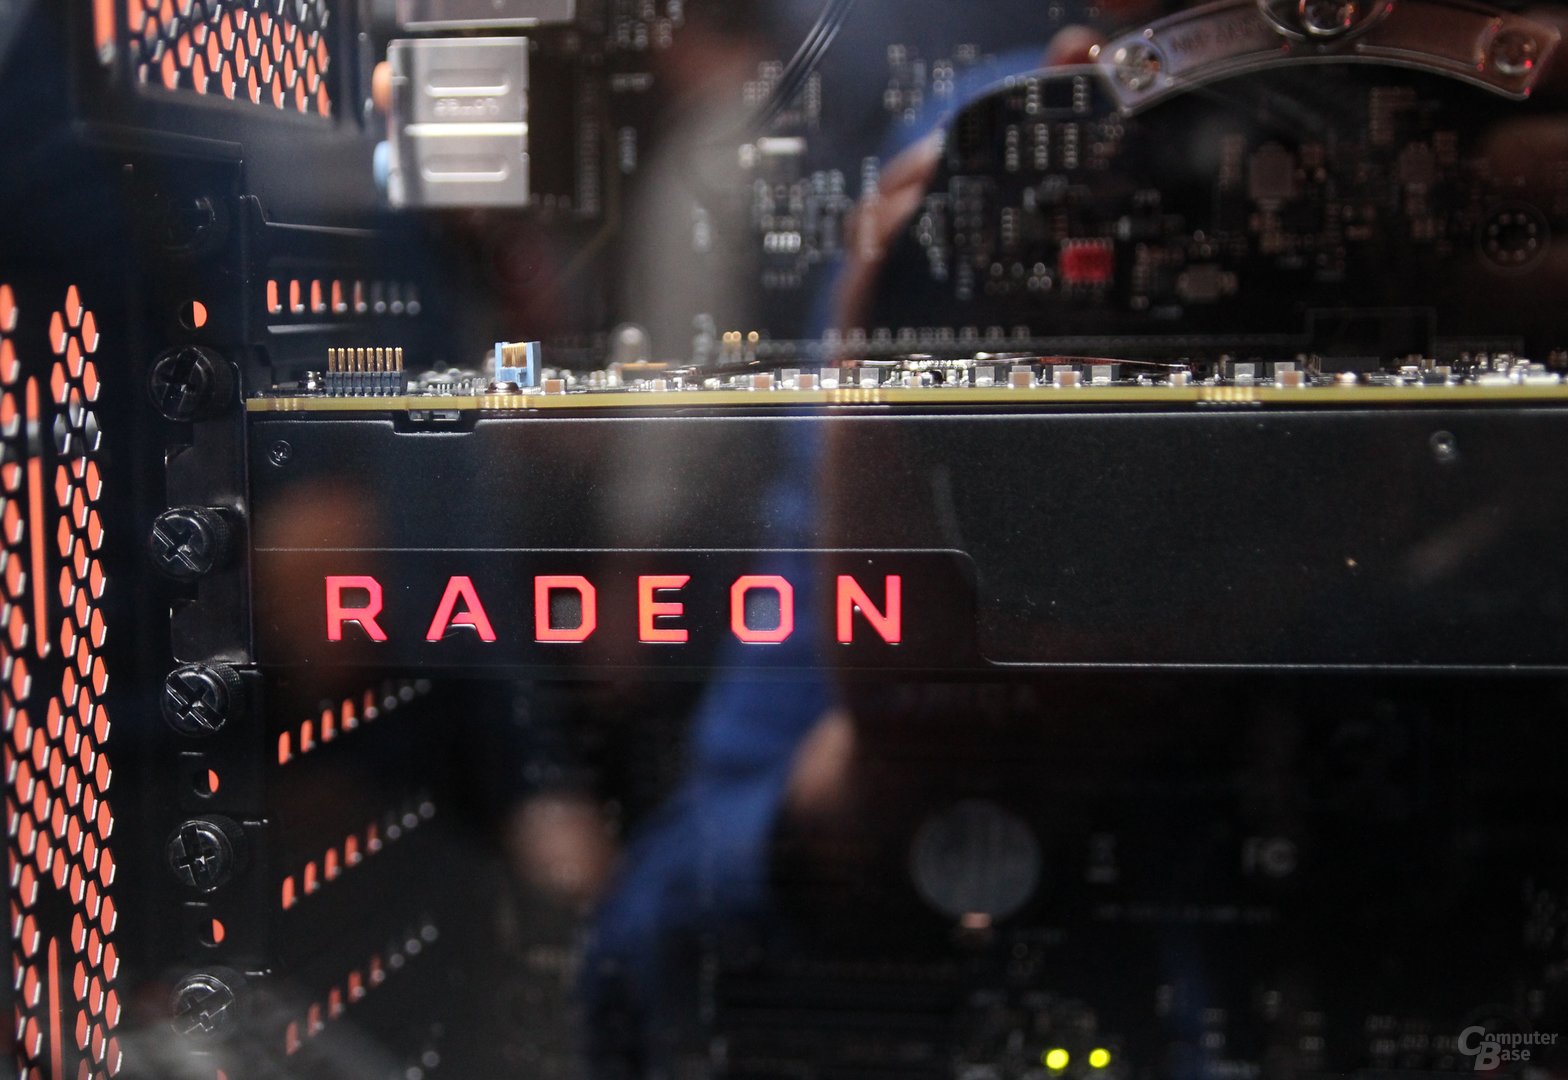 Immagine pubblicata in relazione al seguente contenuto: Foto di una video card AMD Radeon Vega abbianata a una CPU Ryzen 7 1800X | Nome immagine: news25874_AMD-Radeon-Vega_3.jpg